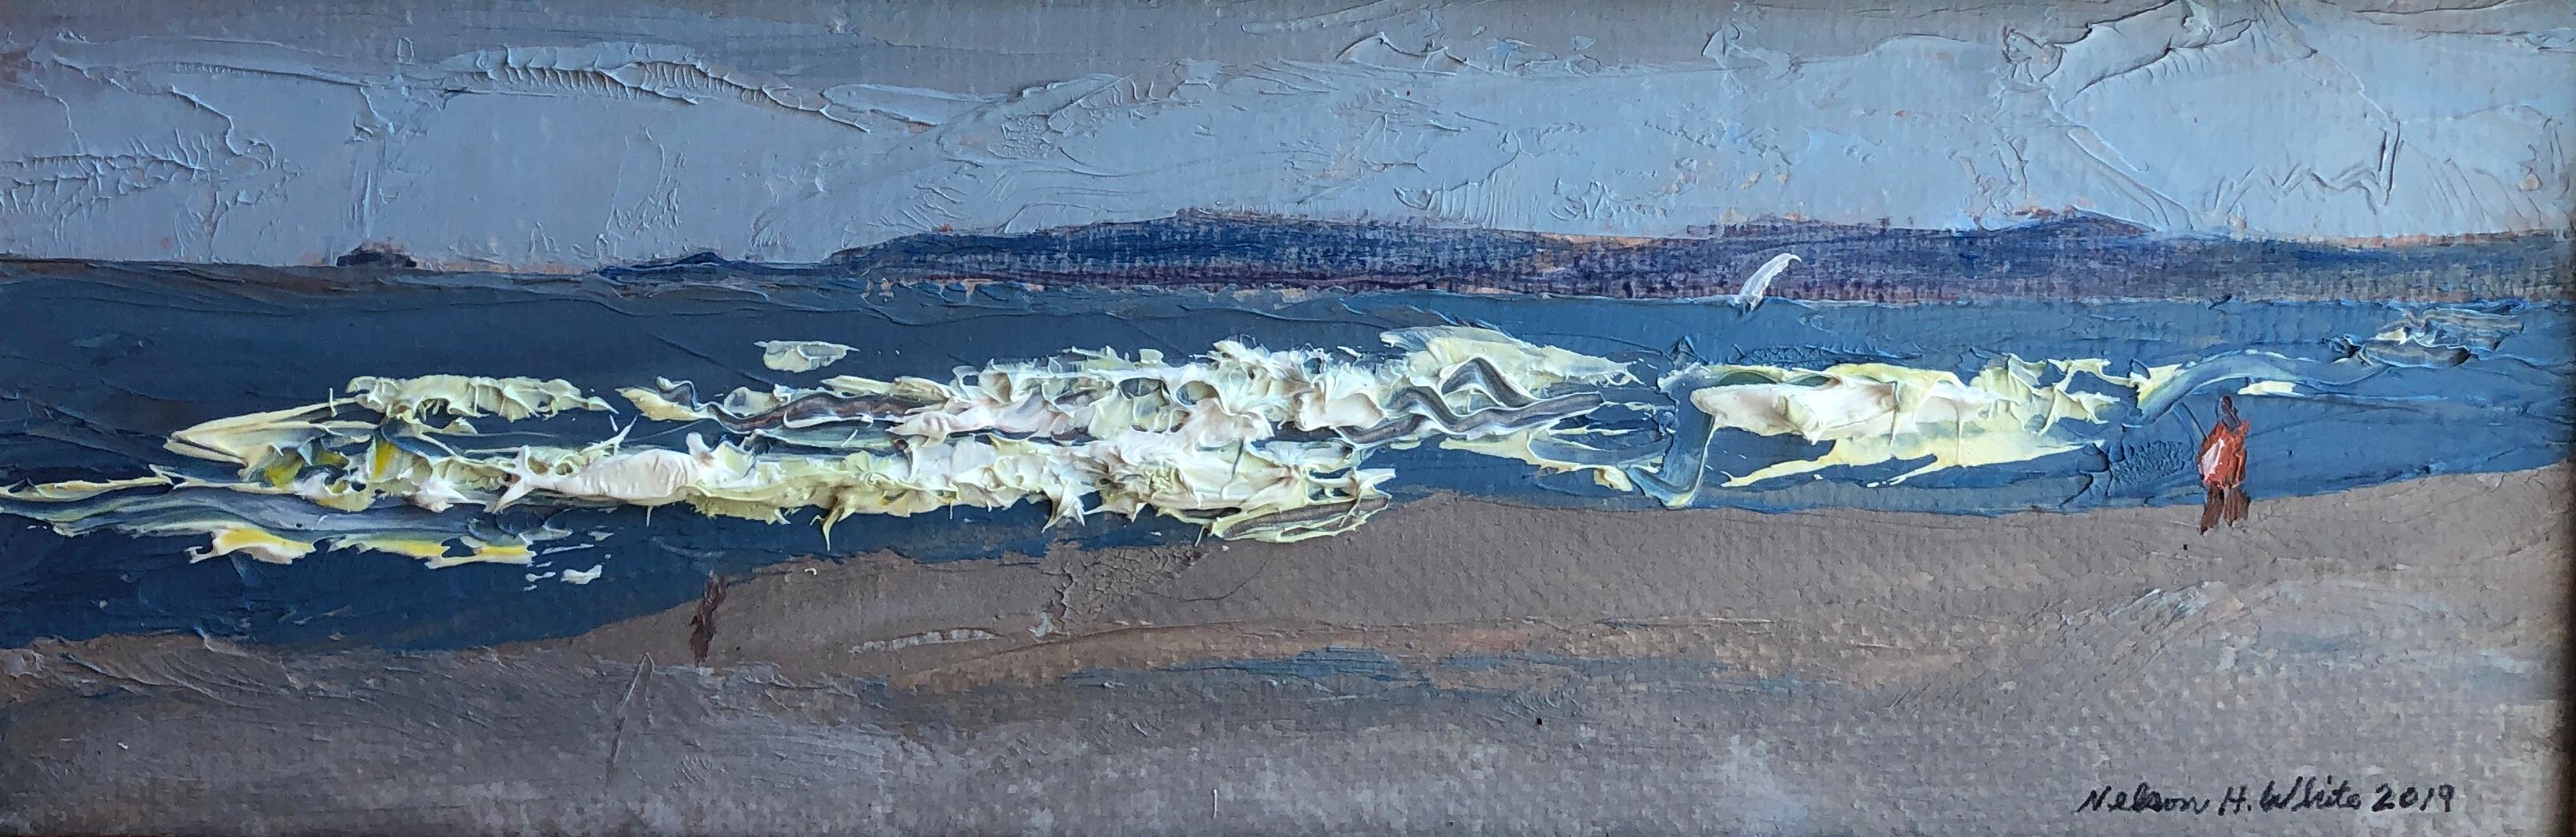 Nelson White Landscape Painting - The Waves, Versilia, Italy